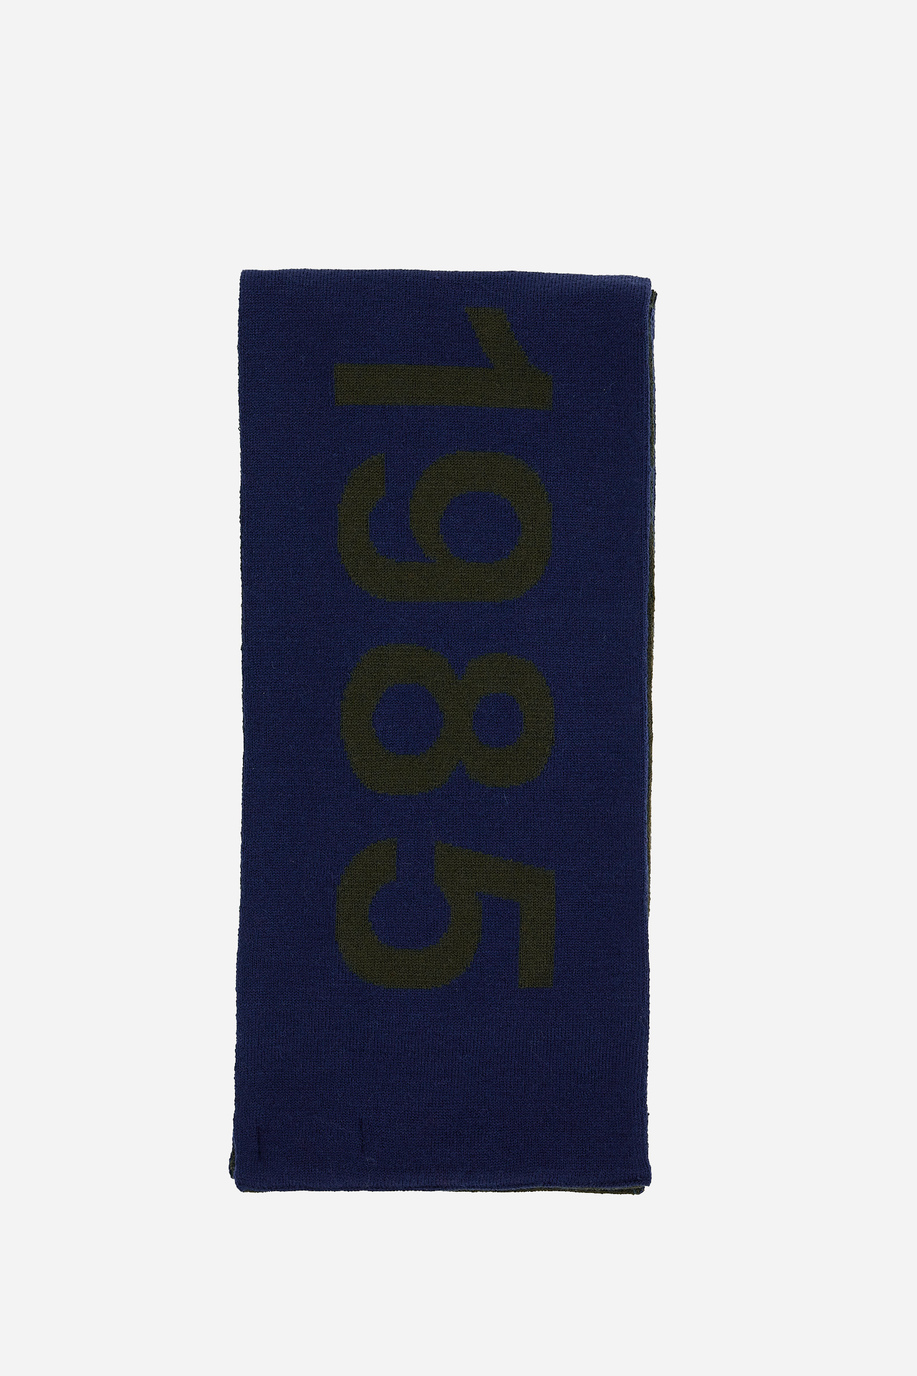 Unisex multicolor scarf - Wardlea - Gifts under £75 for him | La Martina - Official Online Shop